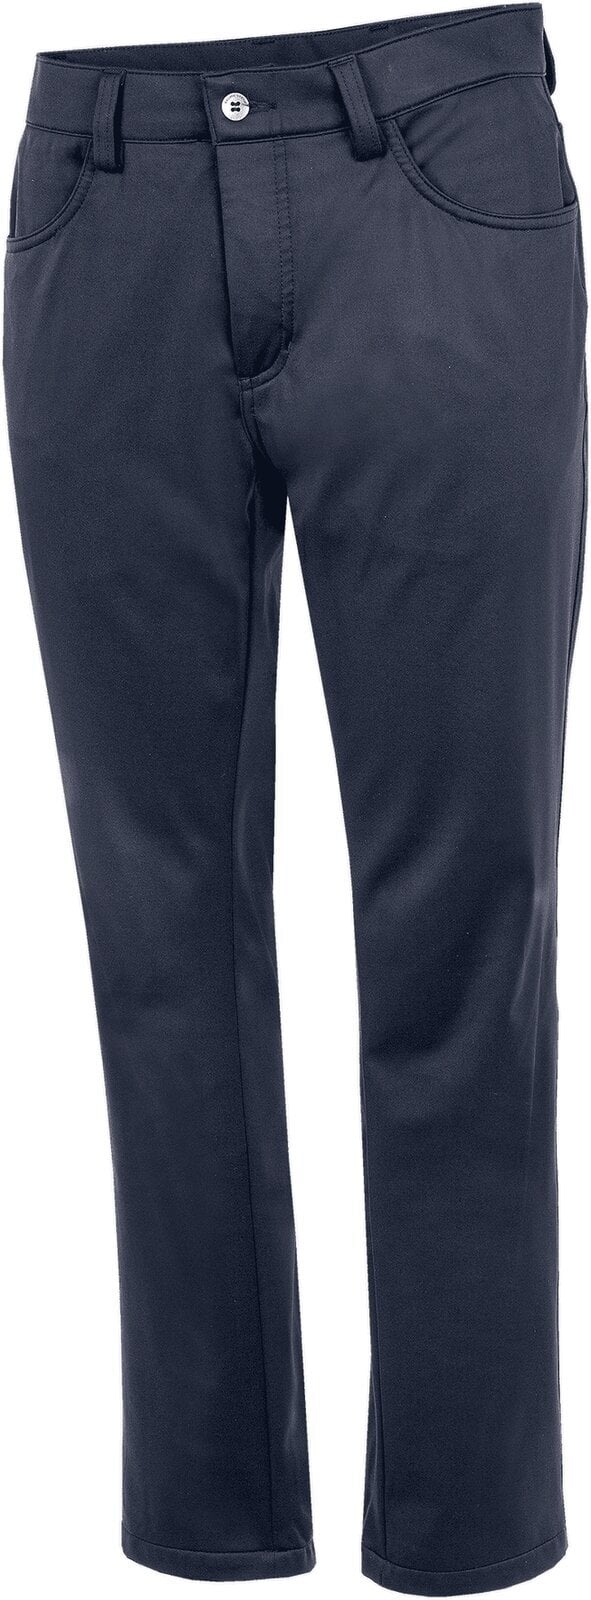 Pantalons Galvin Green Lane MensWindproof And Water Repellent Pants Navy 38/32